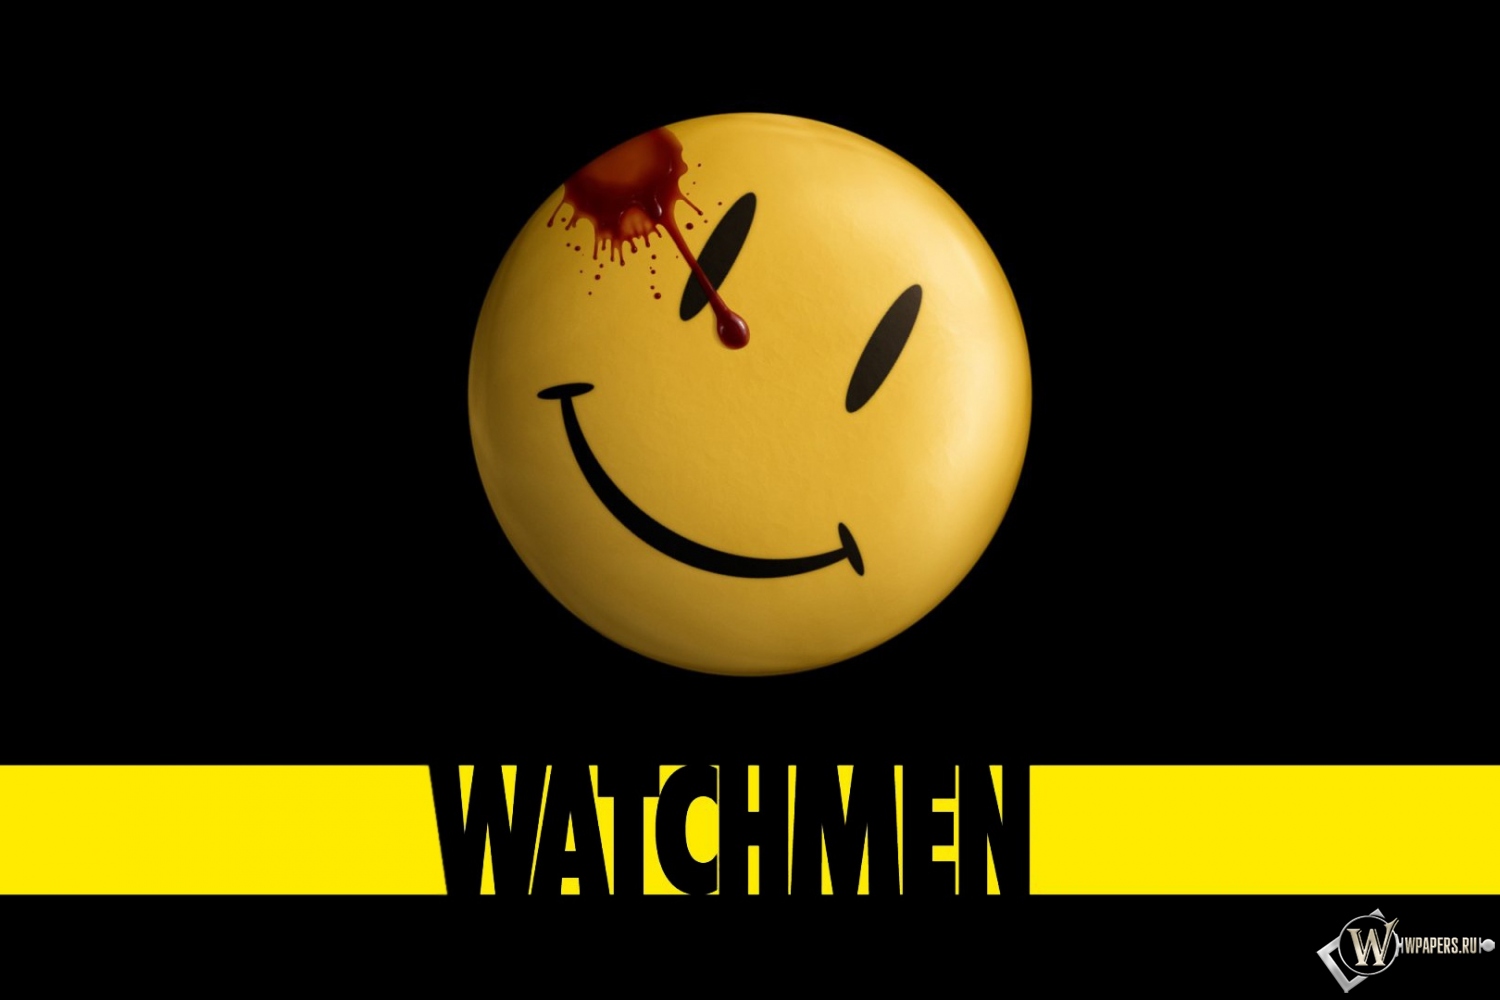 Watchmen 1500x1000